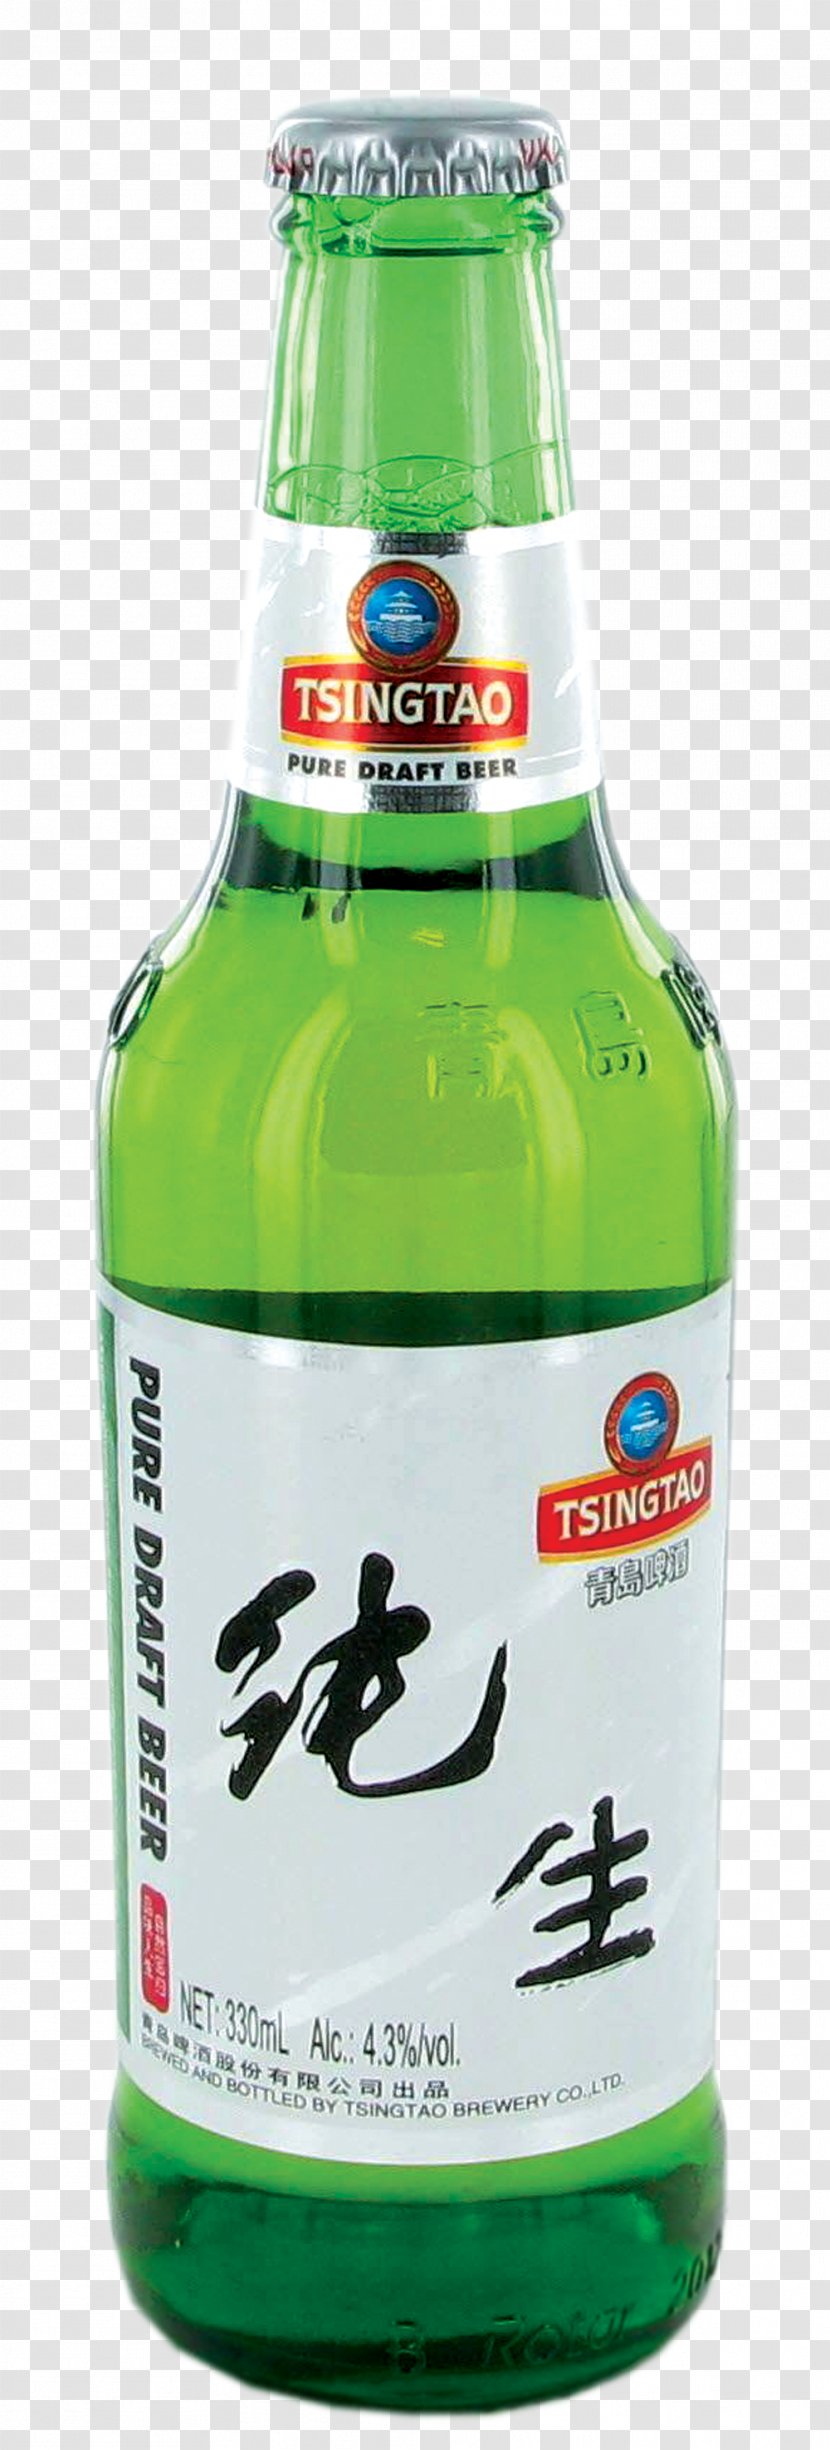 Beer Bottle Tsingtao Brewery Glass Transparent PNG